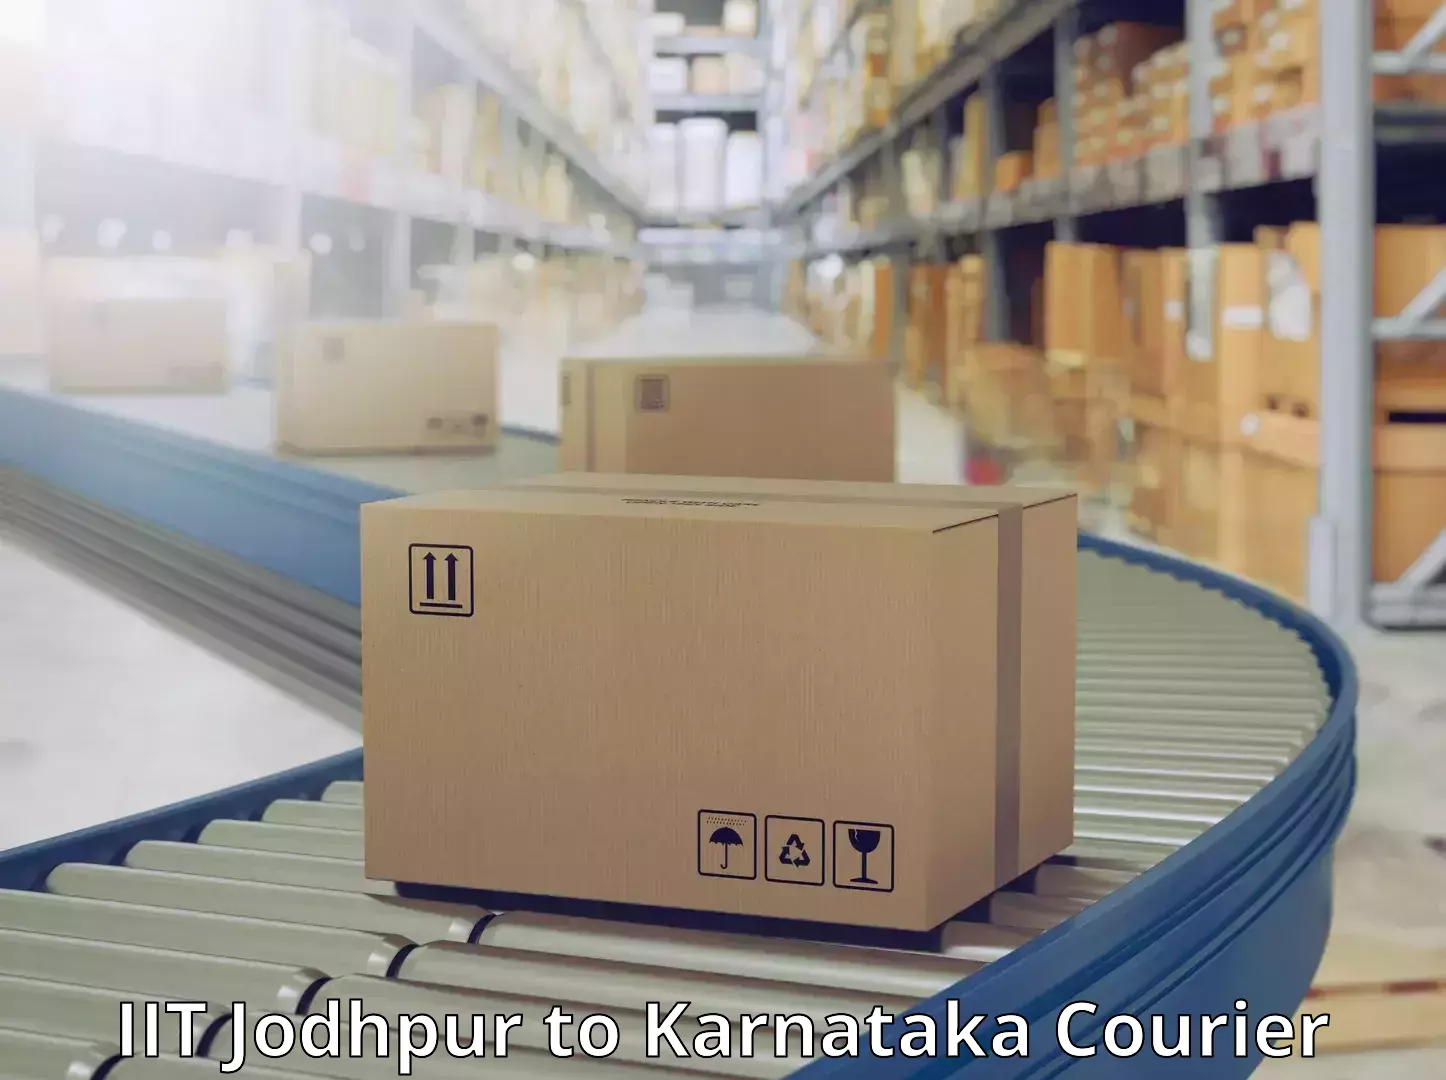 Courier service innovation IIT Jodhpur to Yadgir